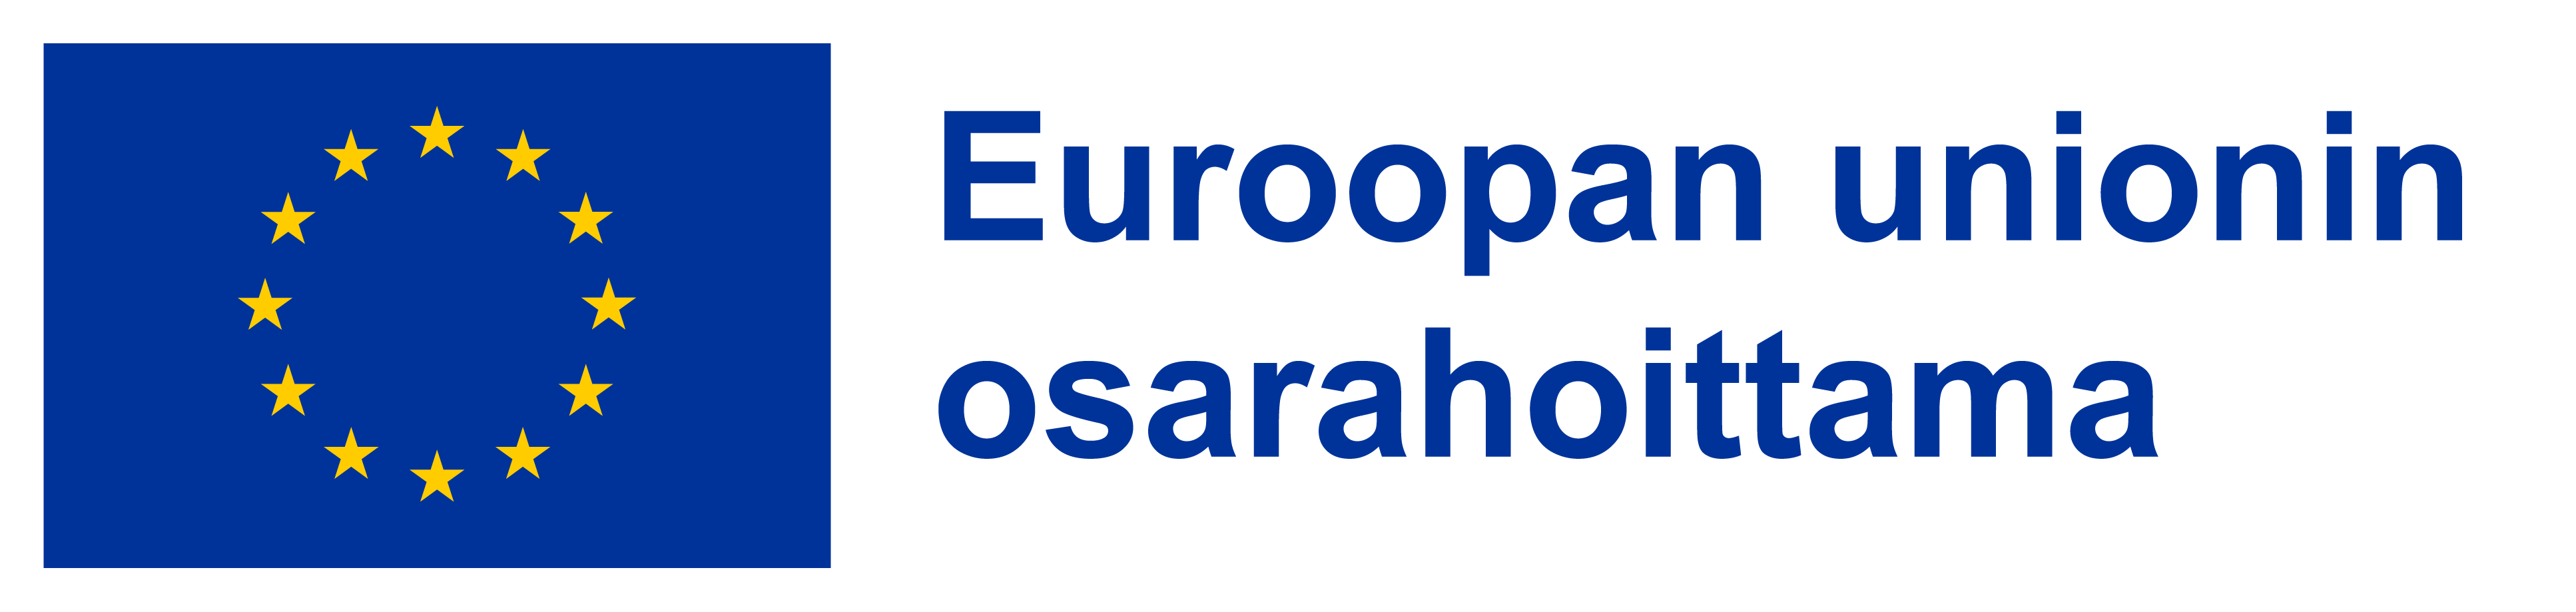 Cofounded by EU logo